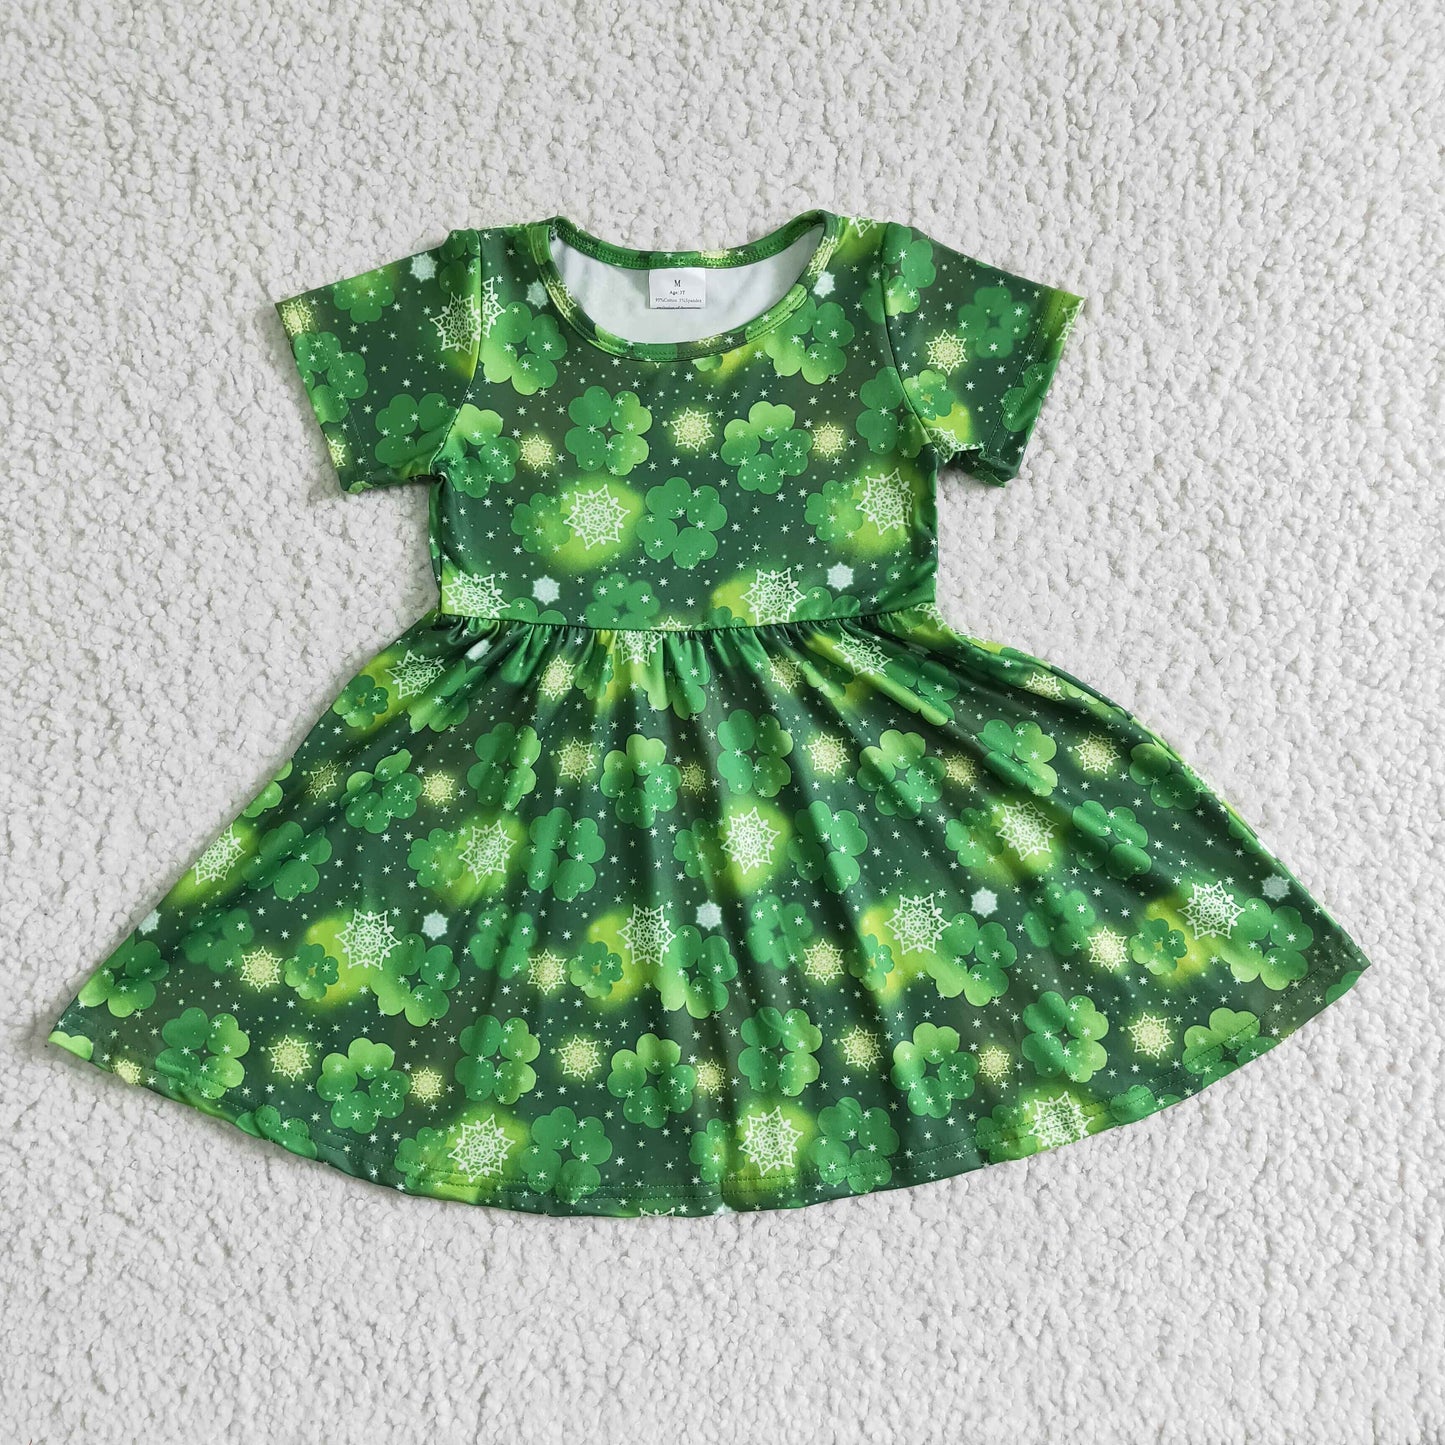 Green short sleeve st patrick twirl dresses